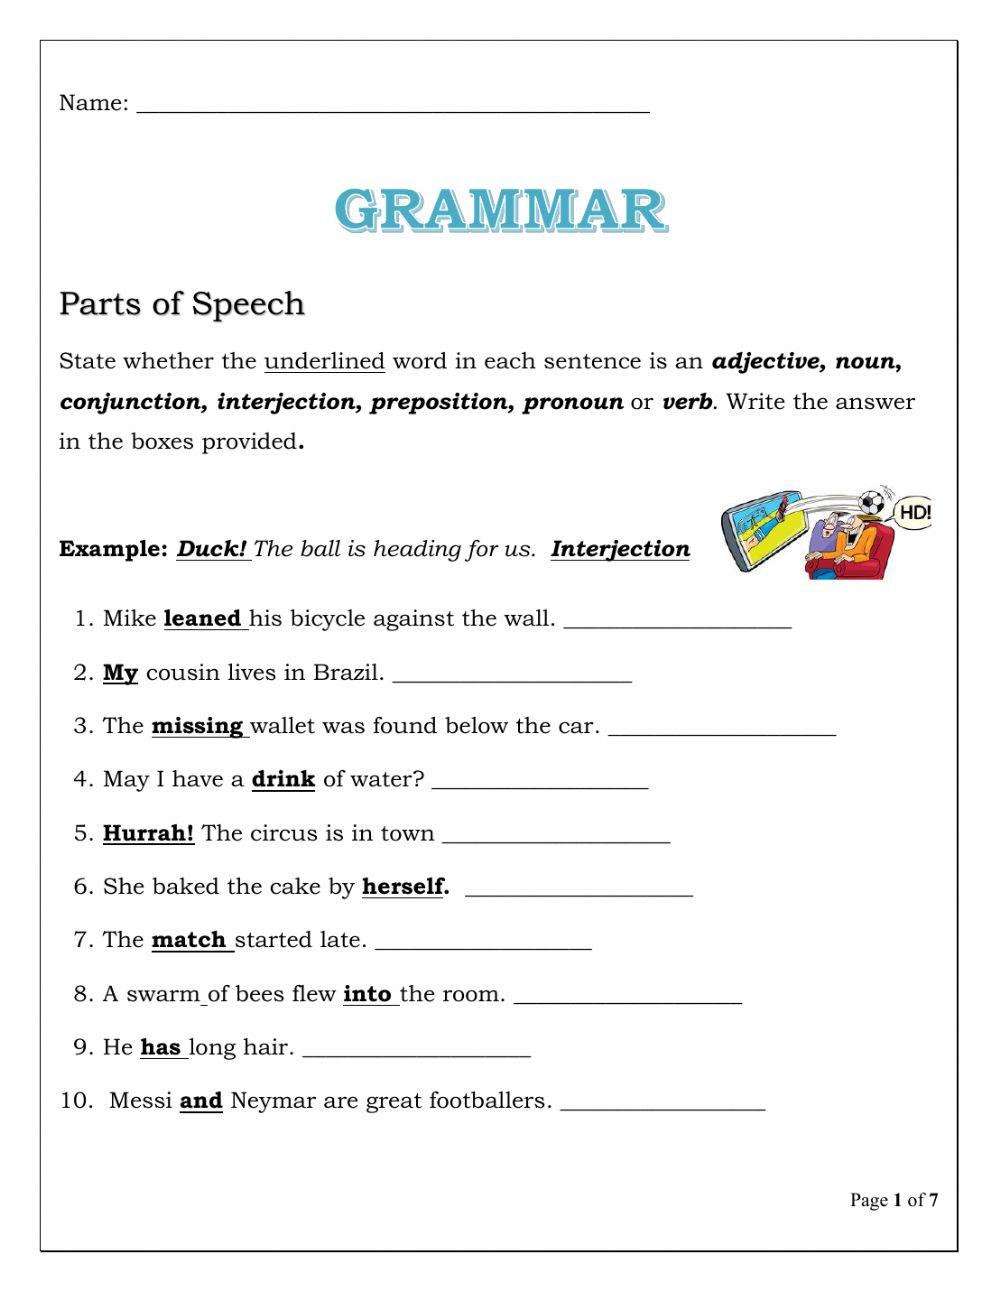 Grammar by Weekes & Clarke LPGPS